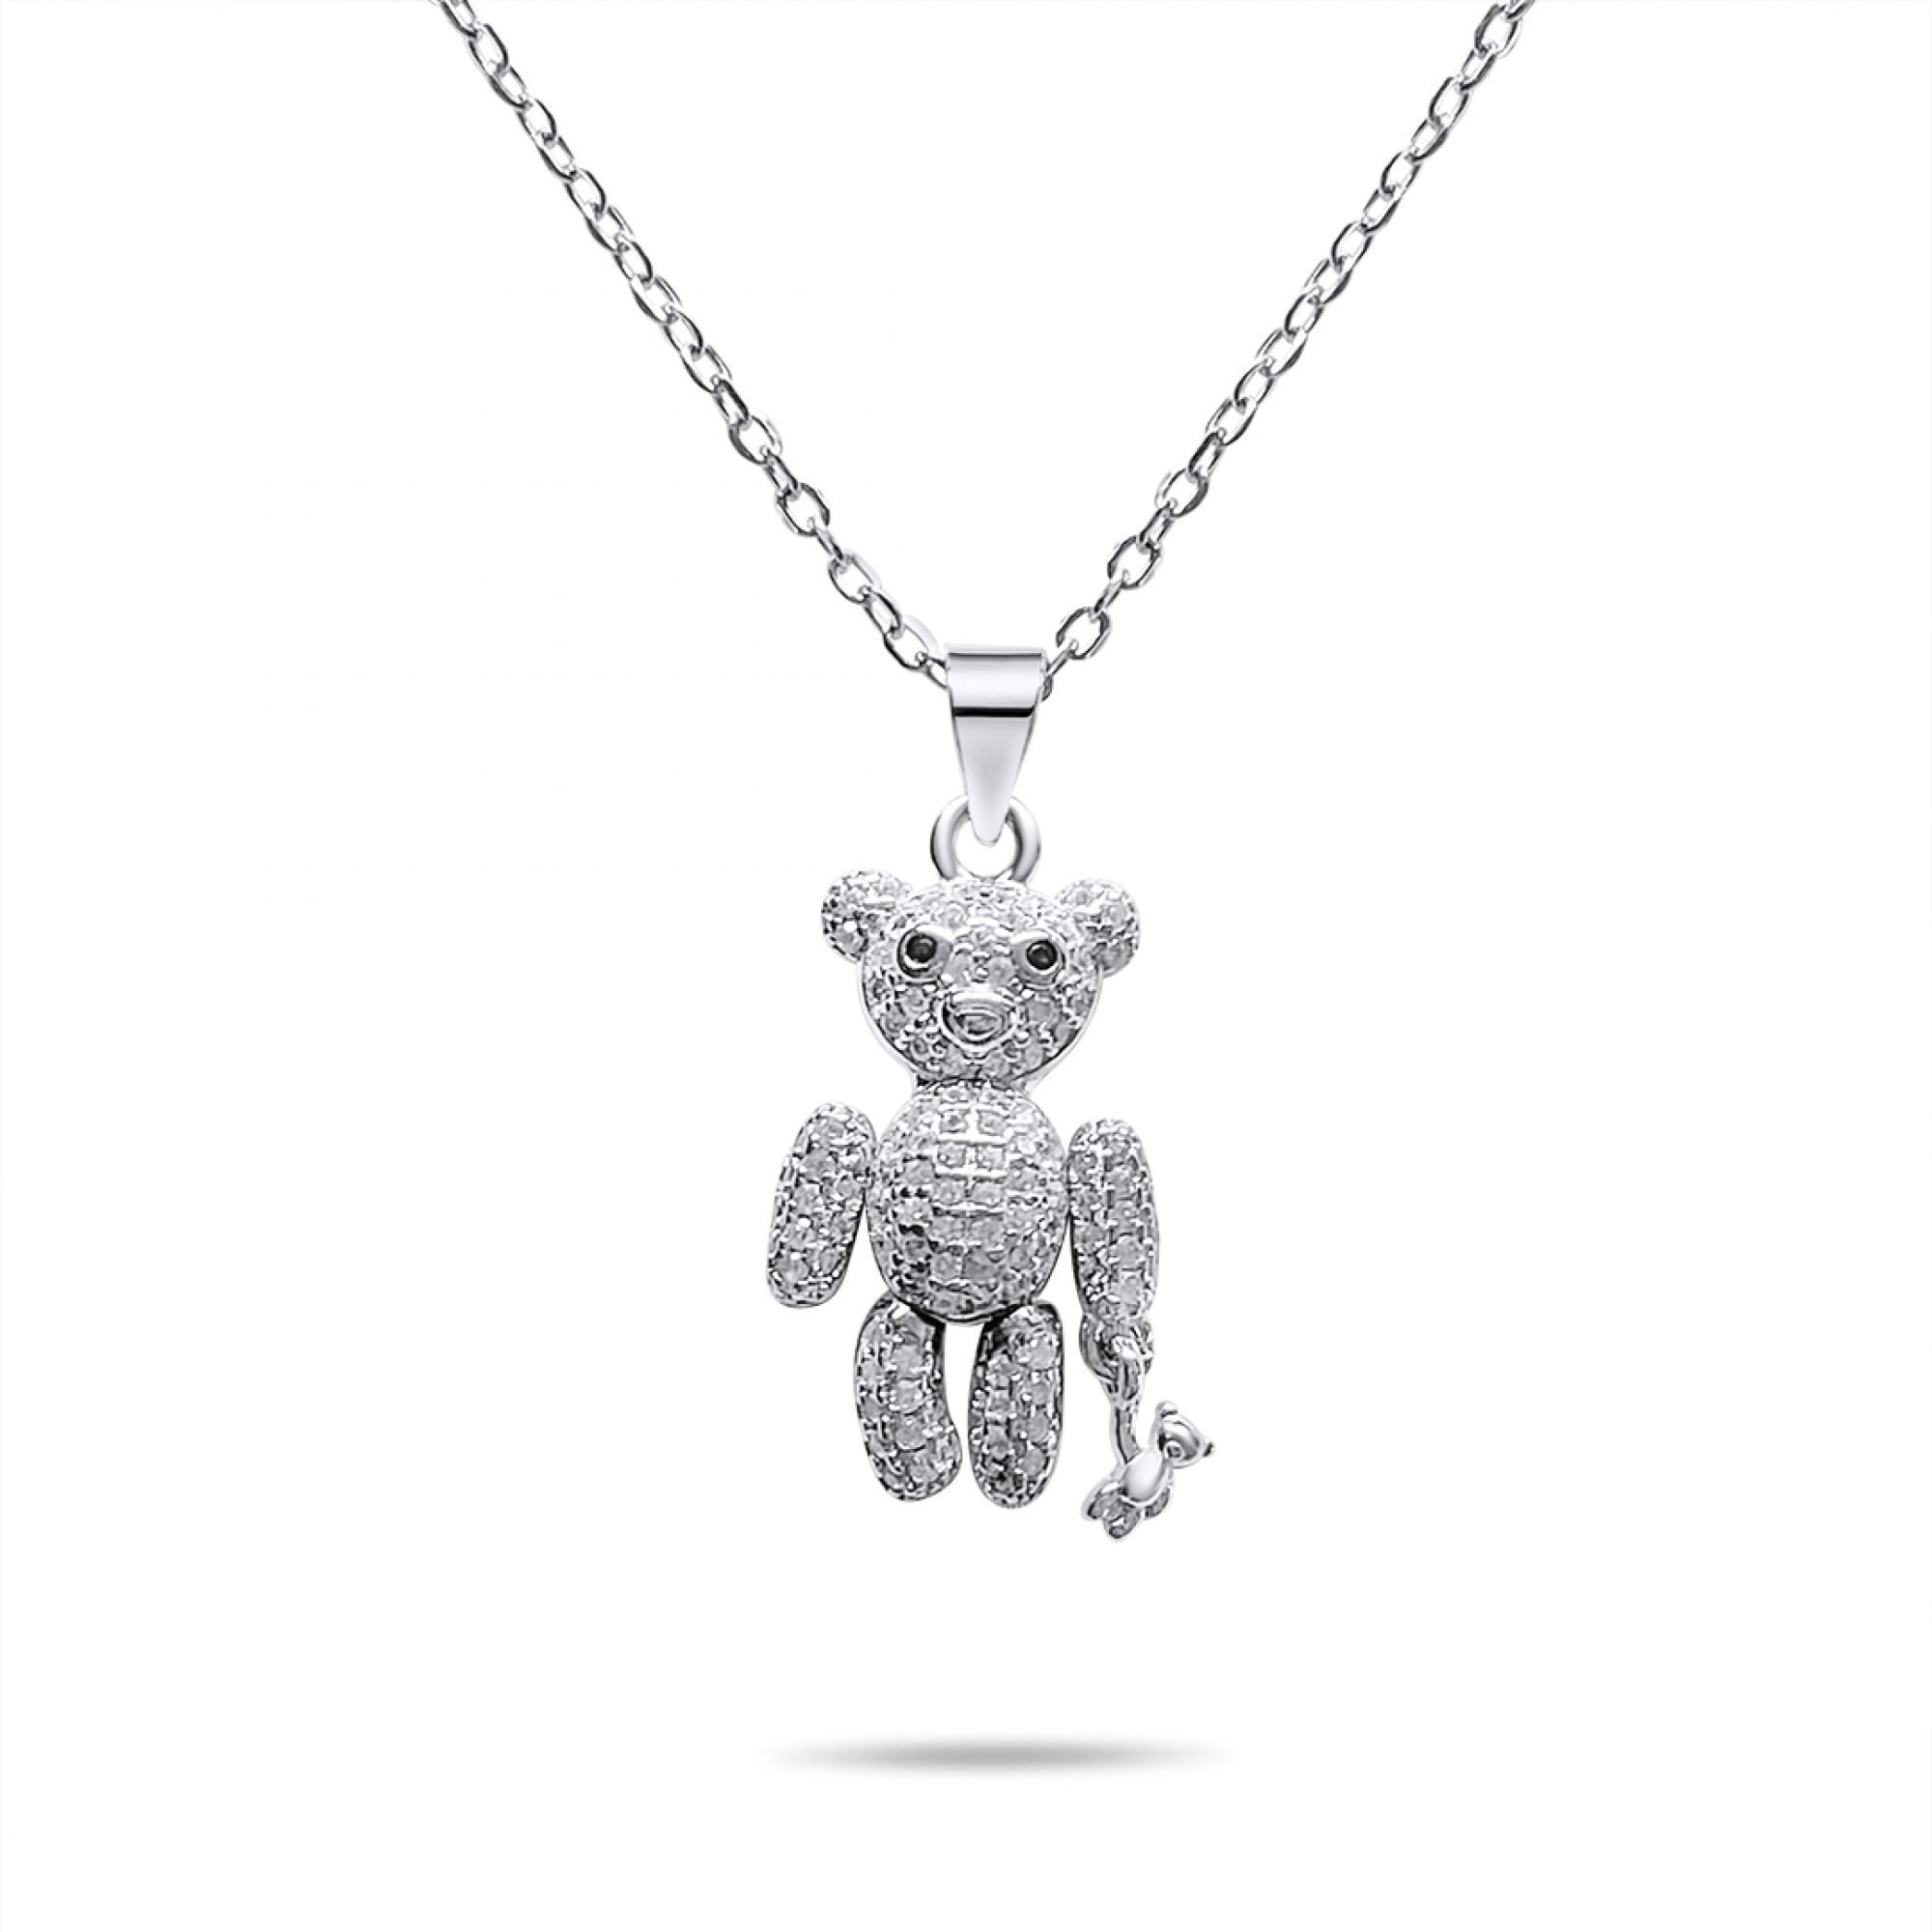 Teddy bear necklace with zircon stones